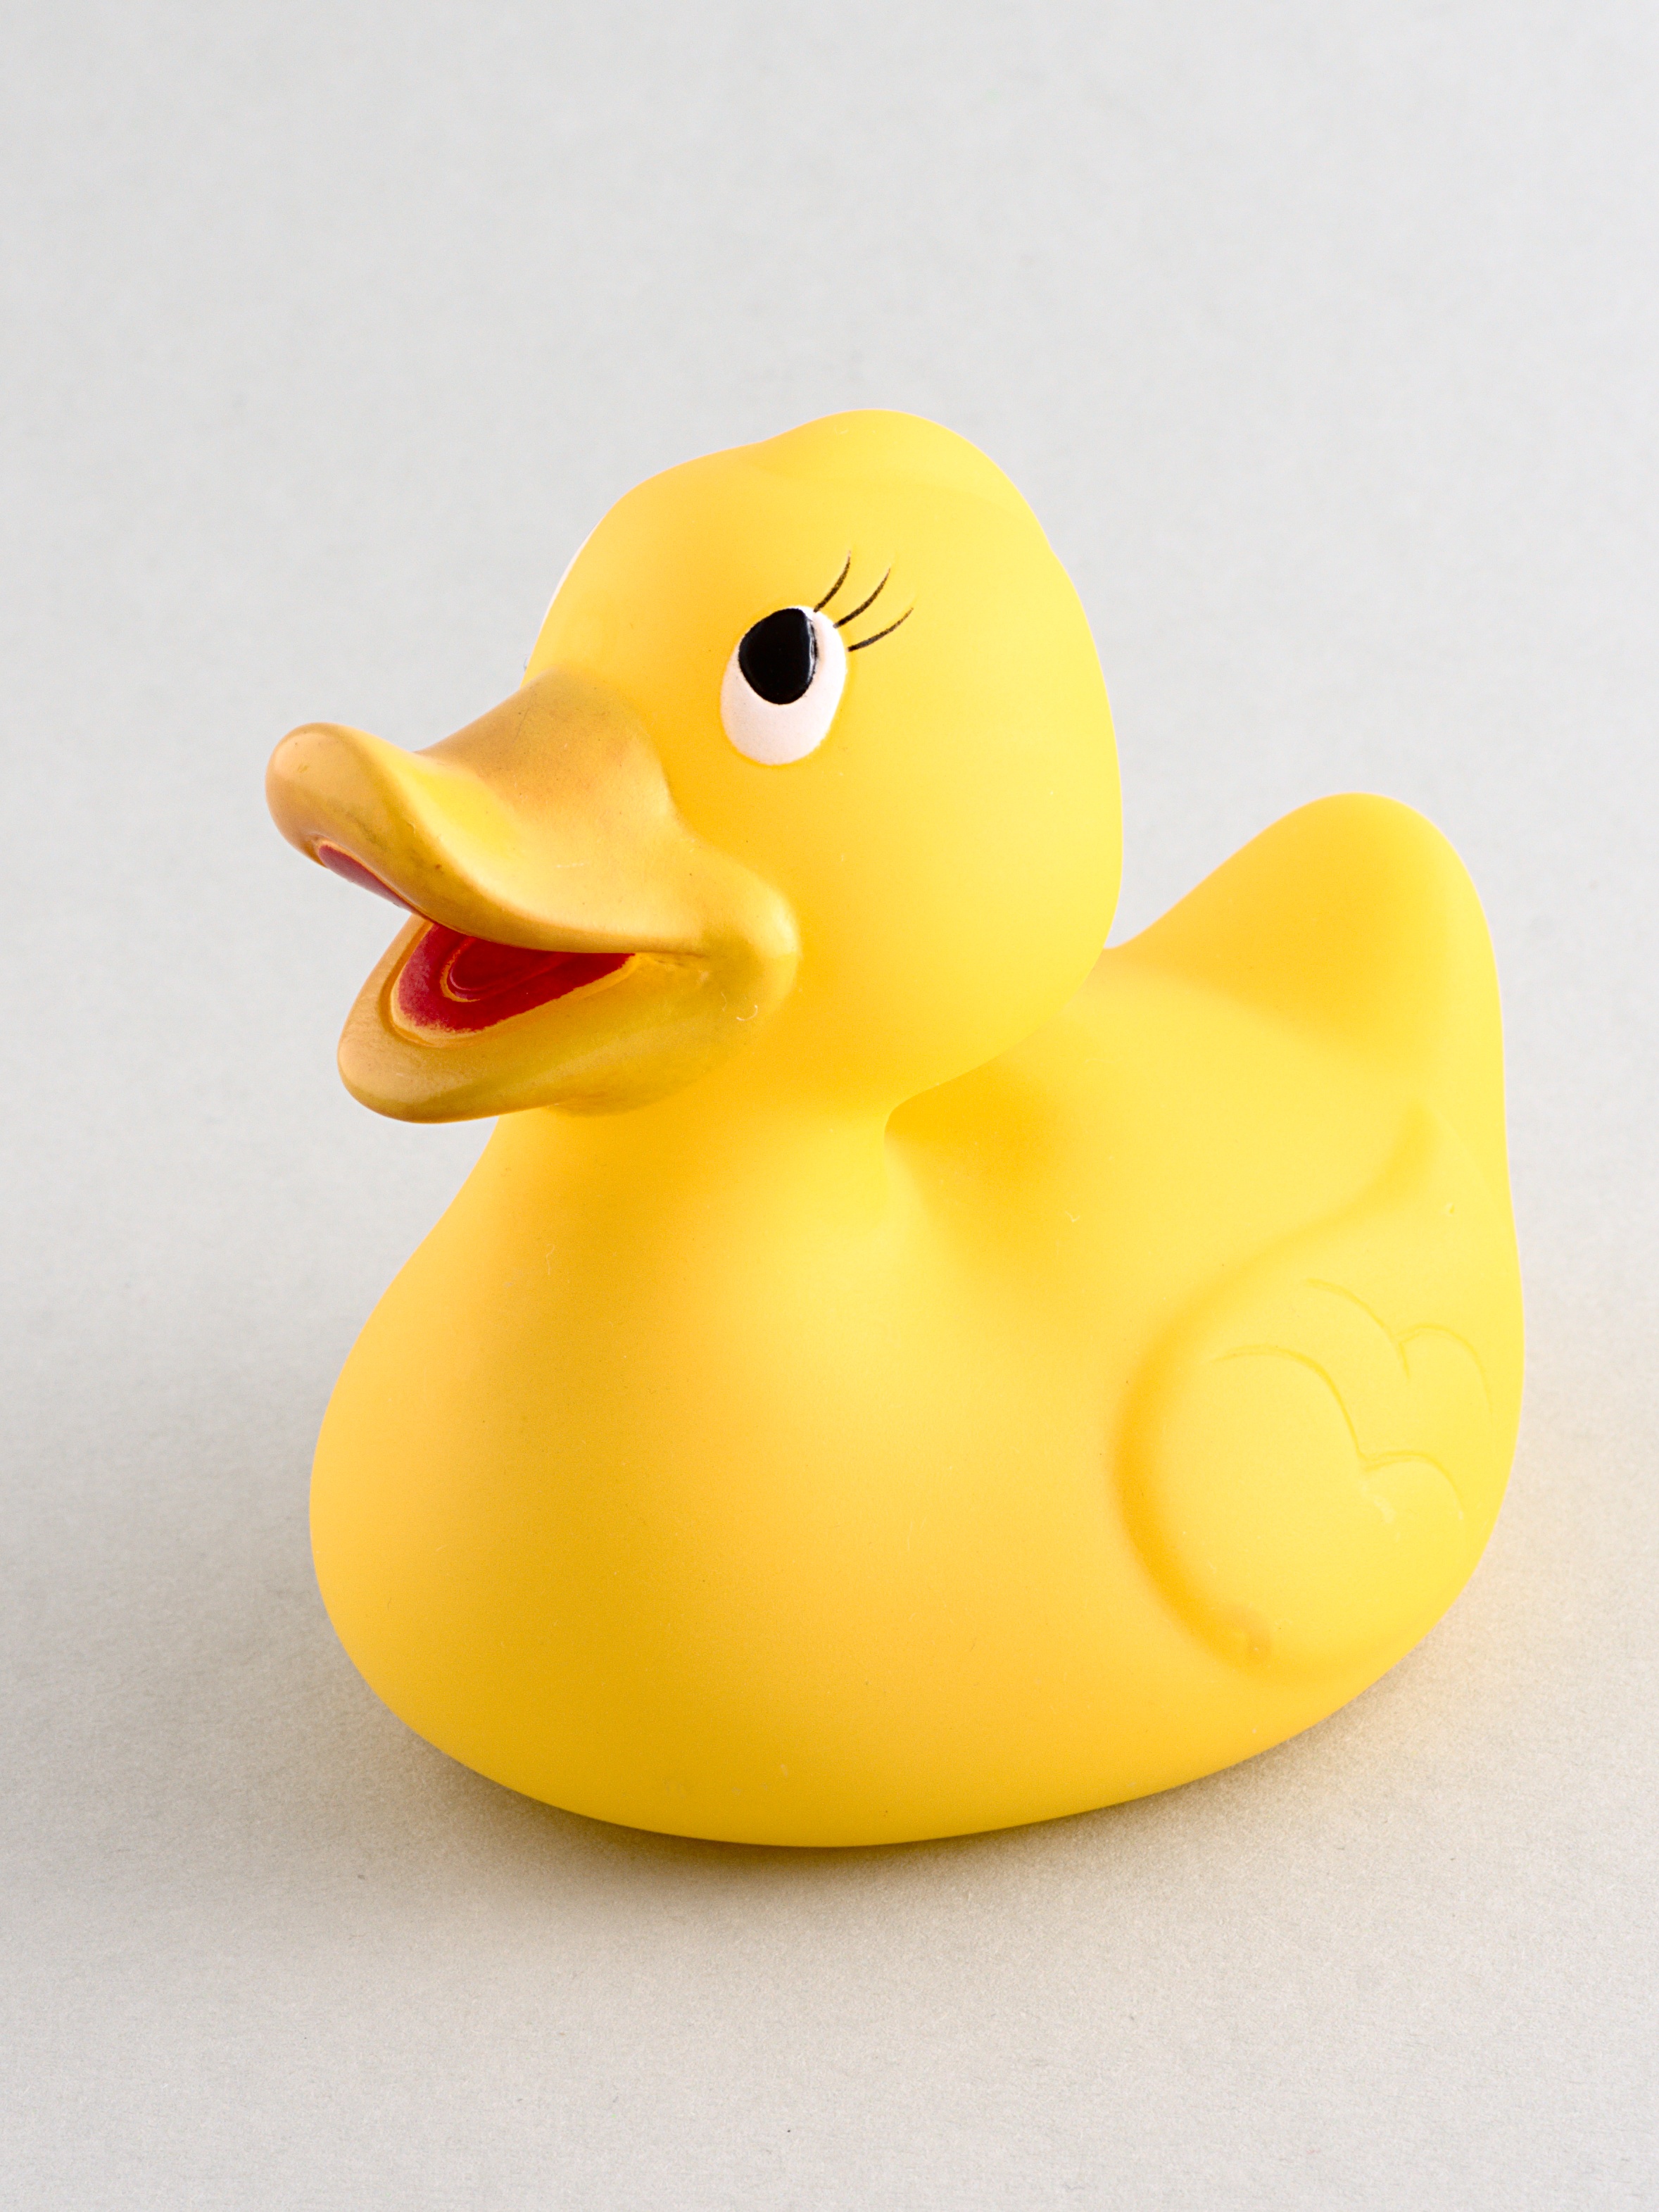 rubber duck wallpaper,rubber ducky,duck,bath toy,yellow,toy